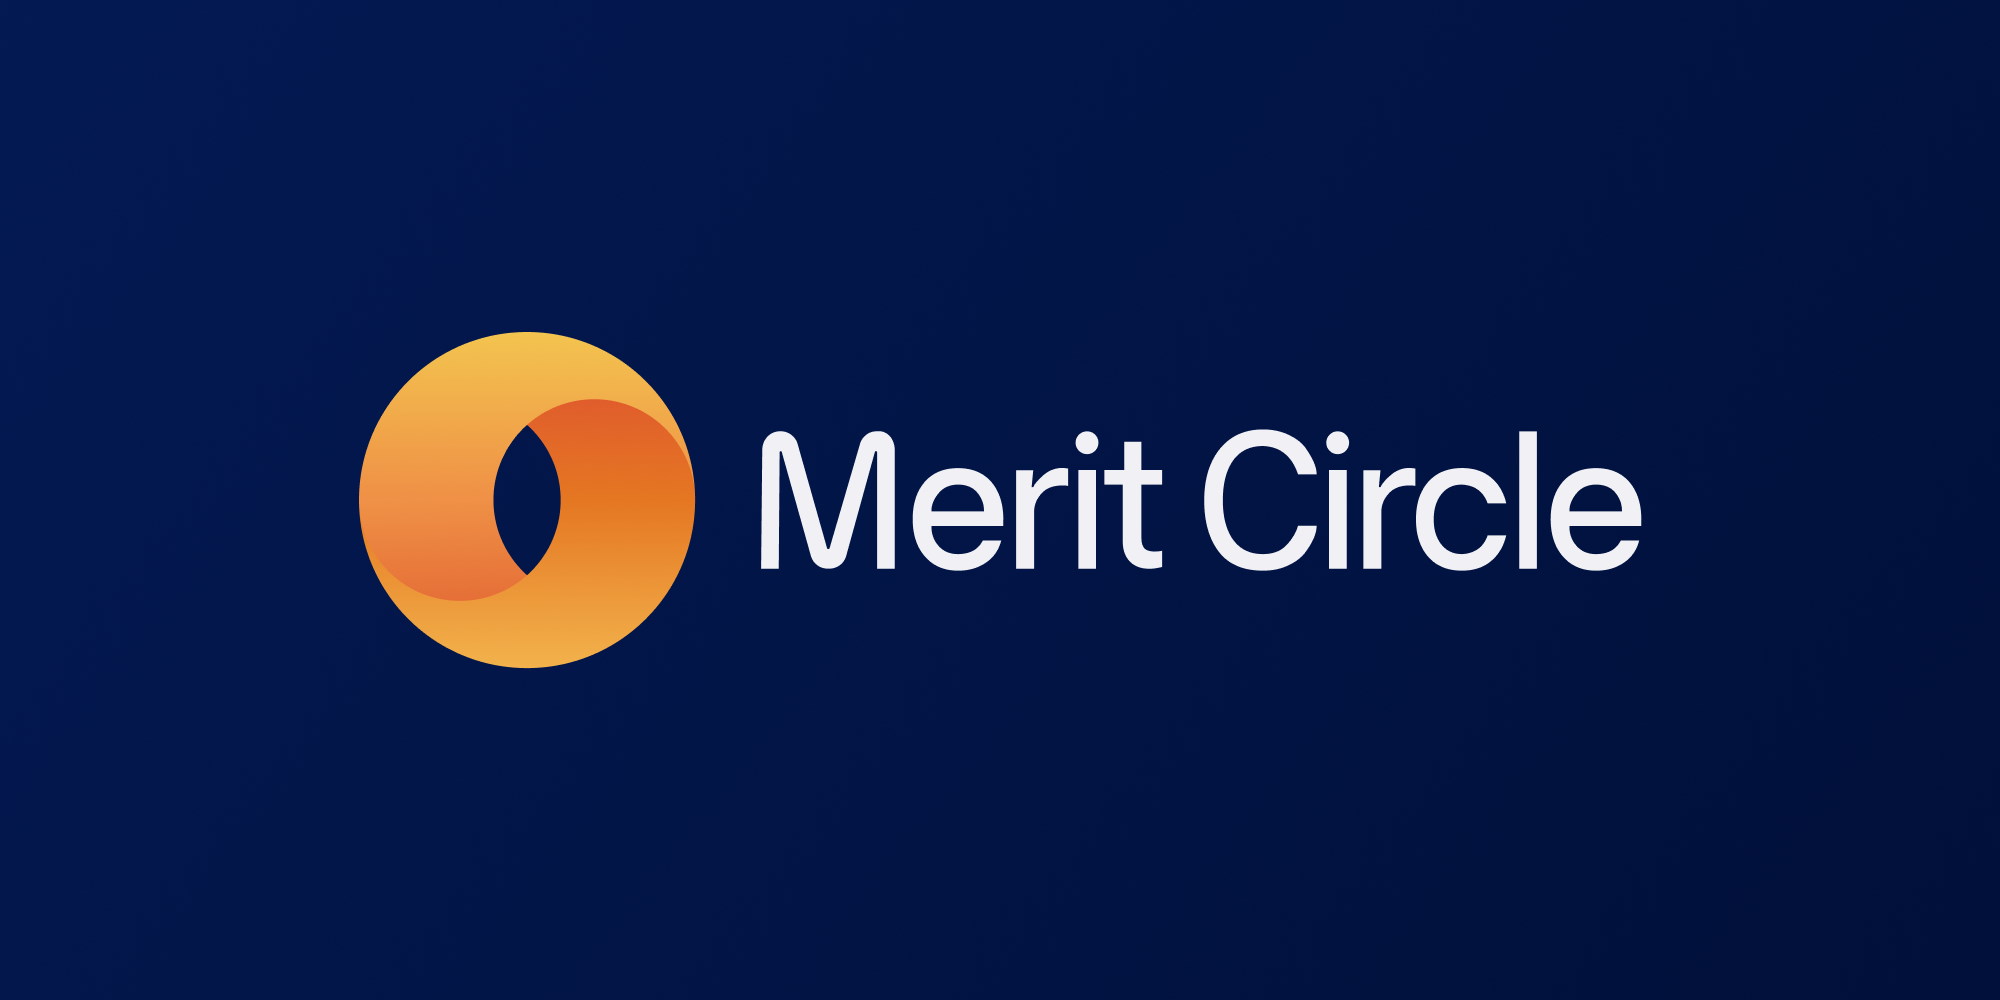 Introducing Merit Circle